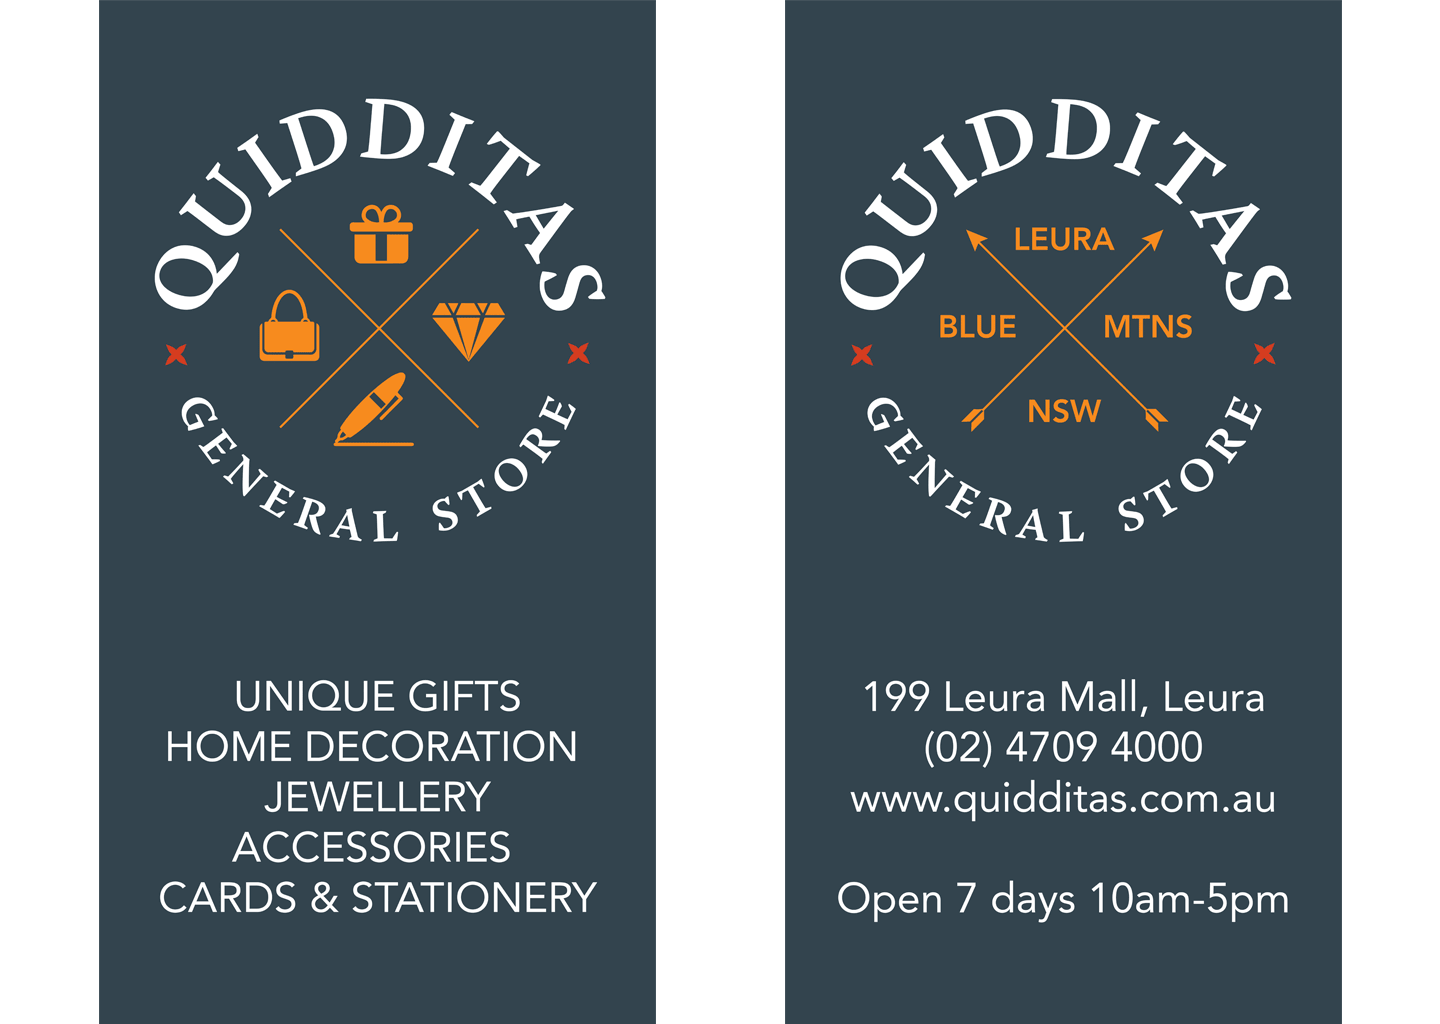 Quidditas General Store facade signs